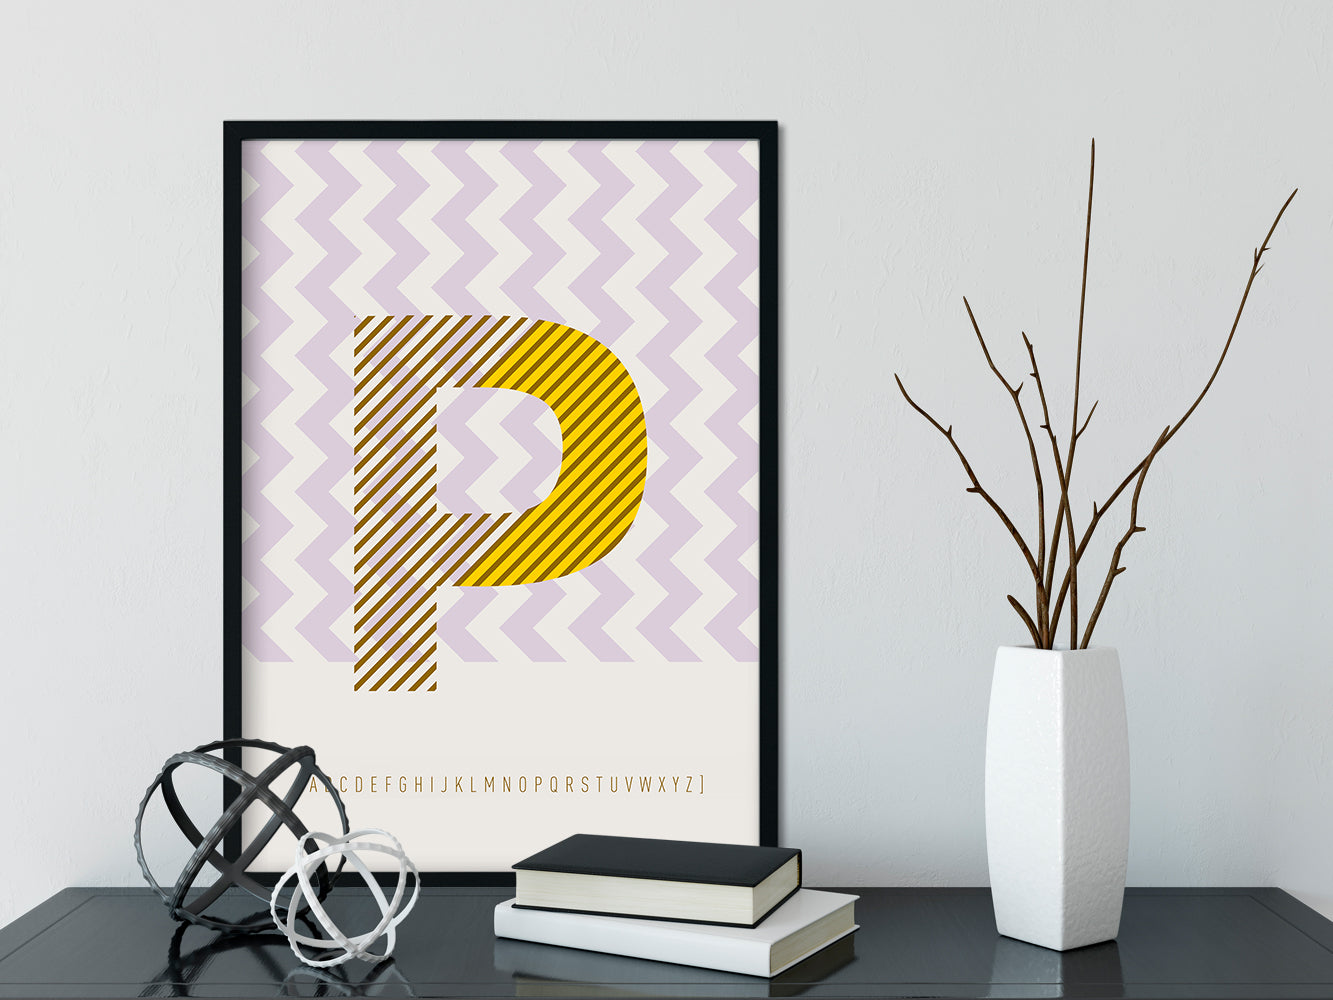 DRUCK ›P-TYPEFACE‹ / ABC, Wandbild, Typo-Poster, Kunstdruck, Alphabet, Typografie